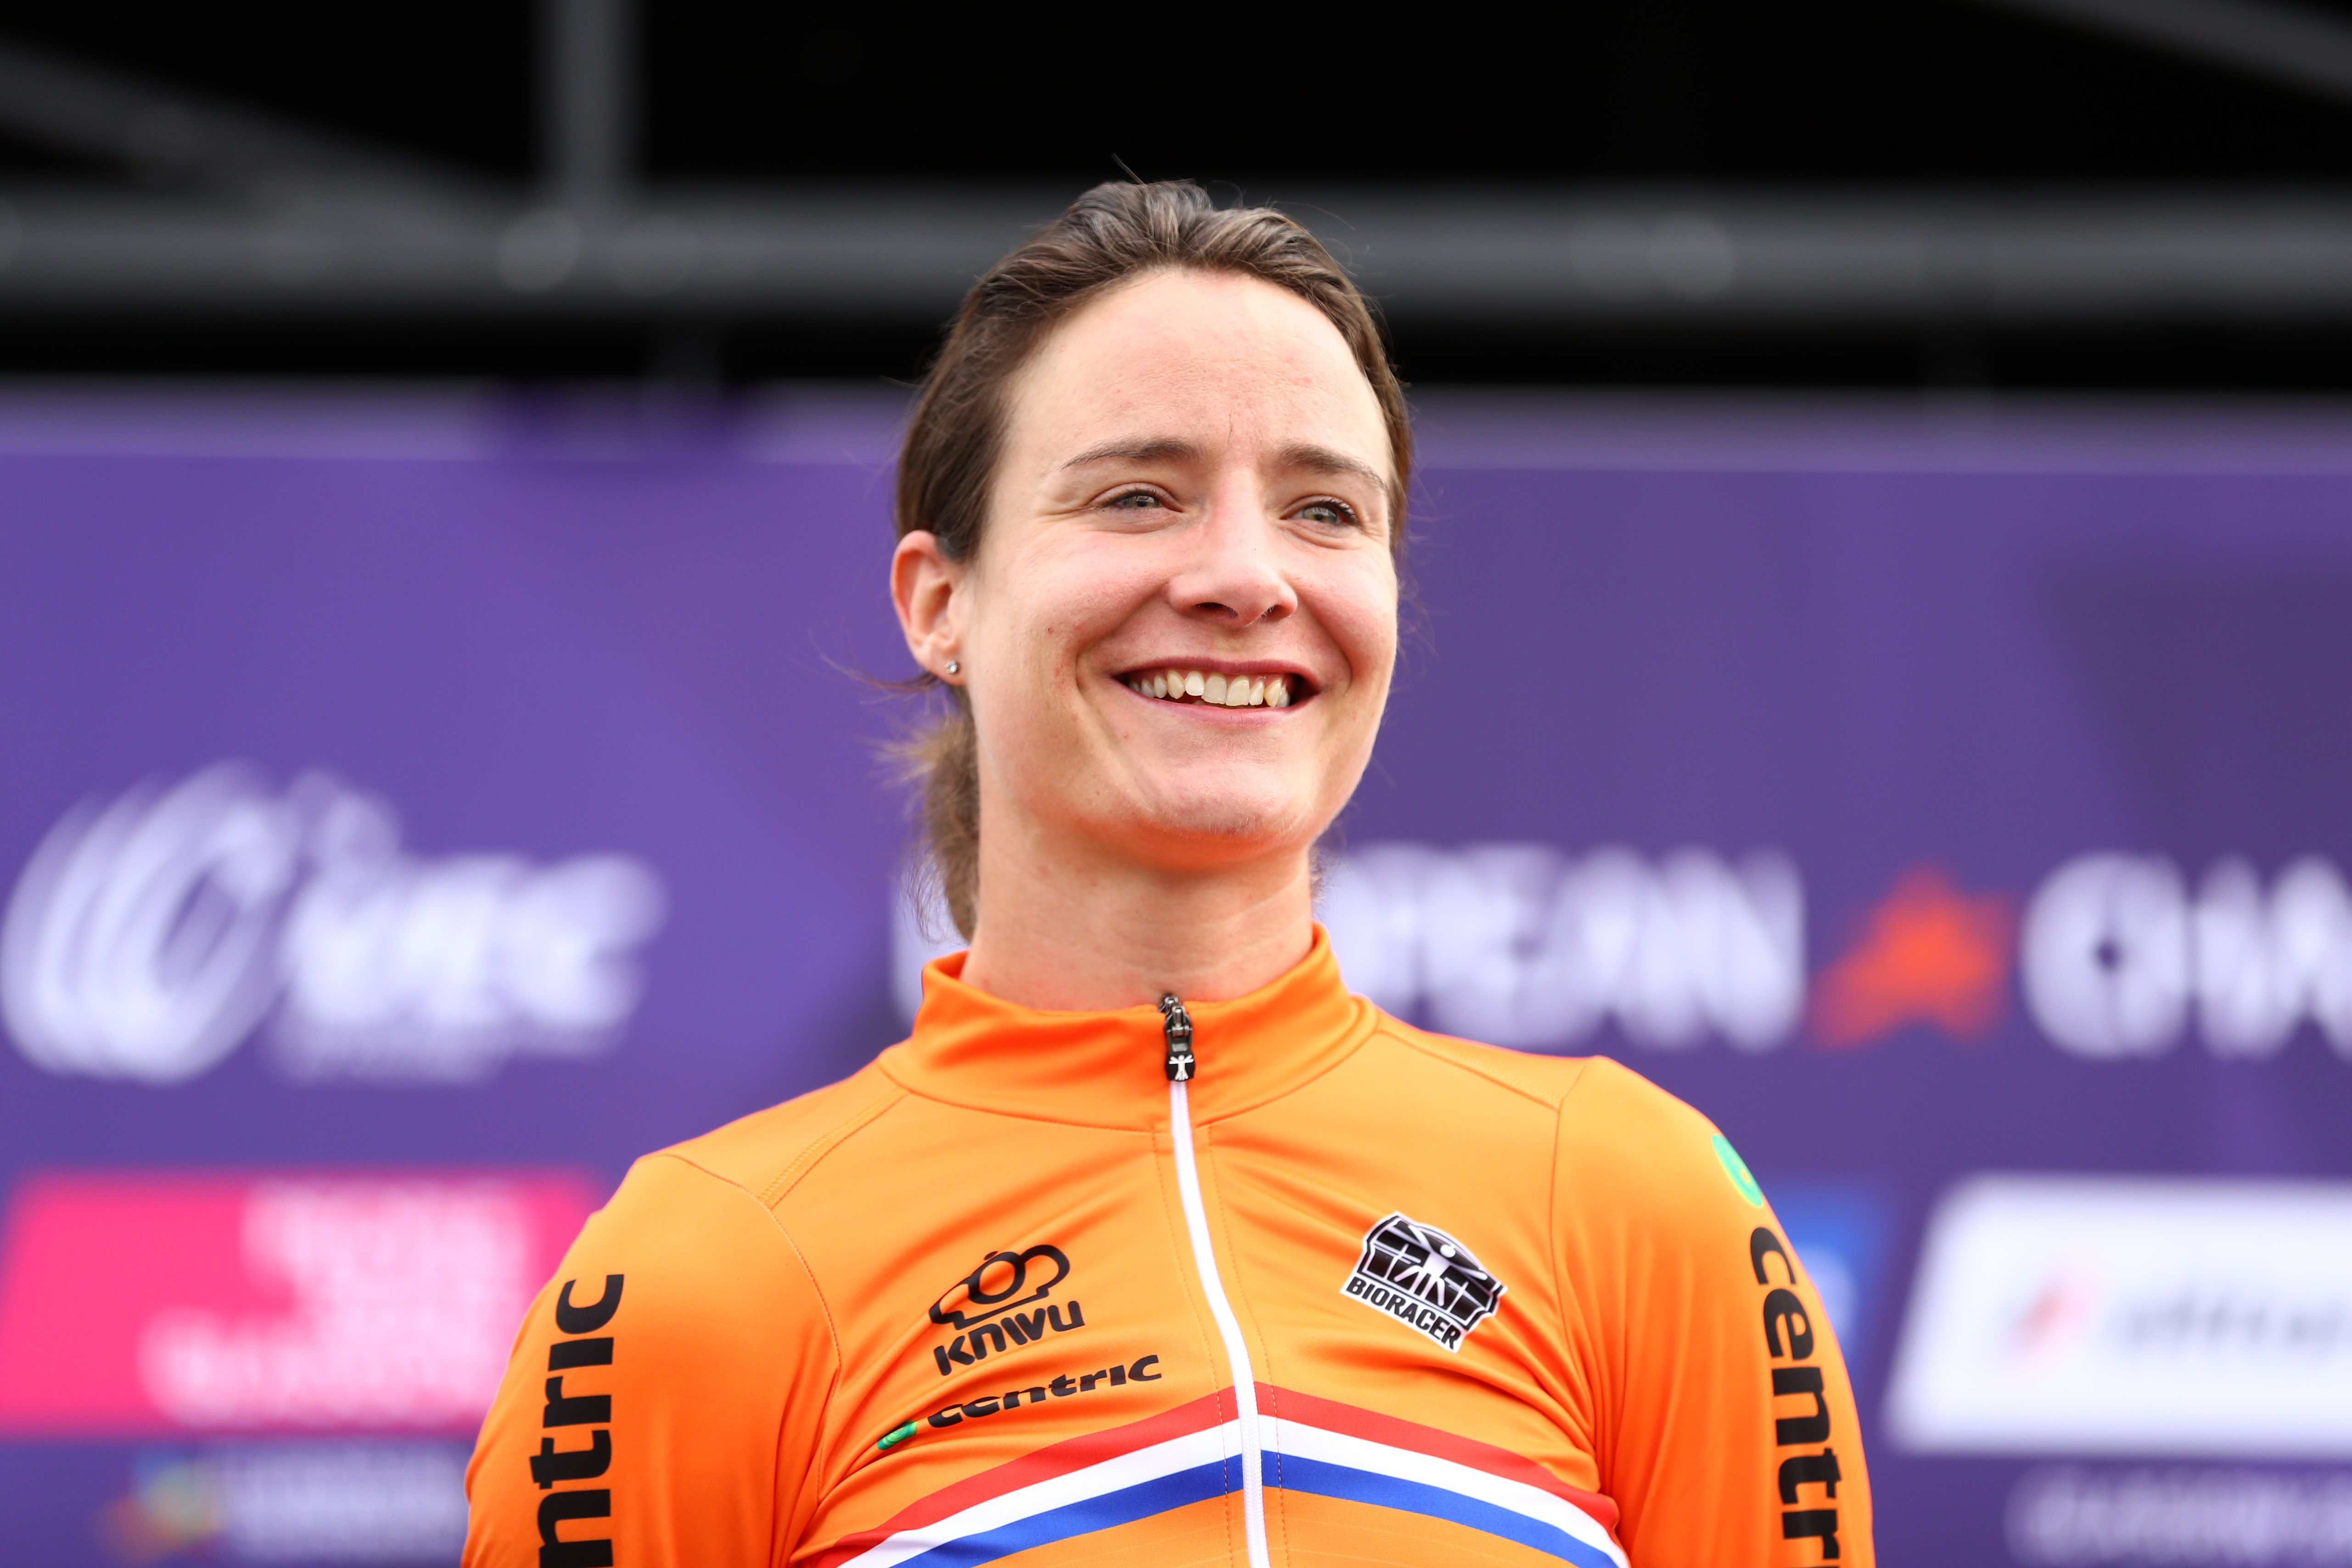 Dutch cyclist Marianne Vos